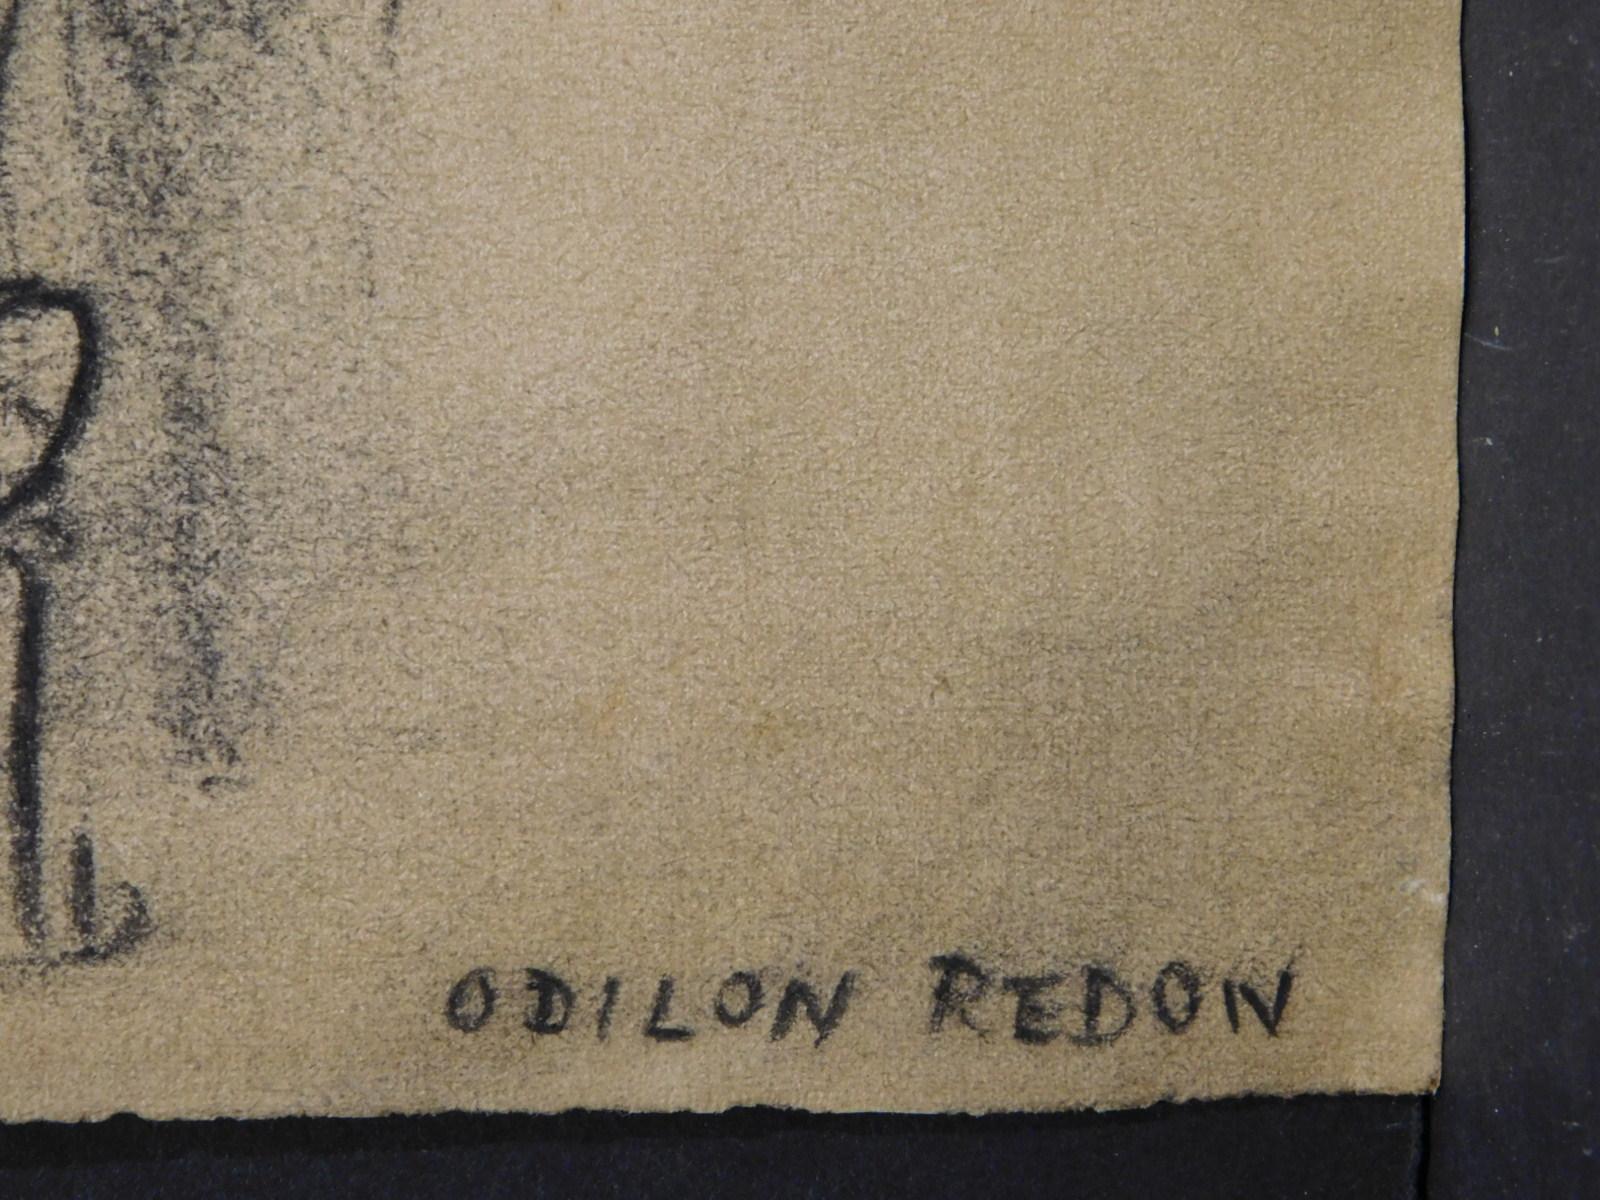 After Odilon Redon: Surreal Portrait